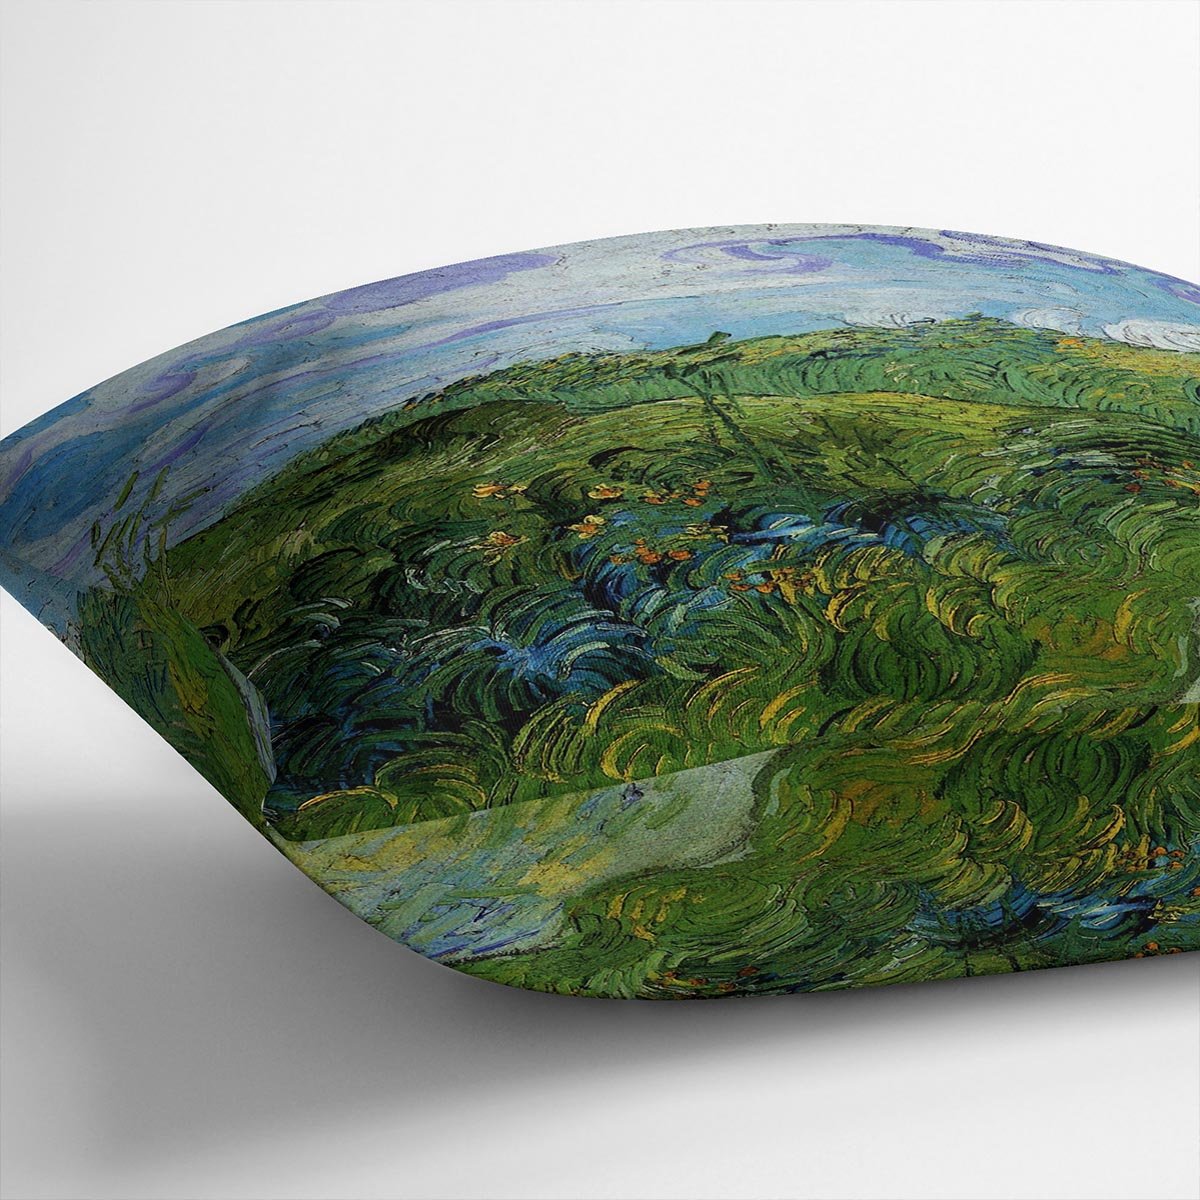 Green Wheat Fields by Van Gogh Throw Pillow